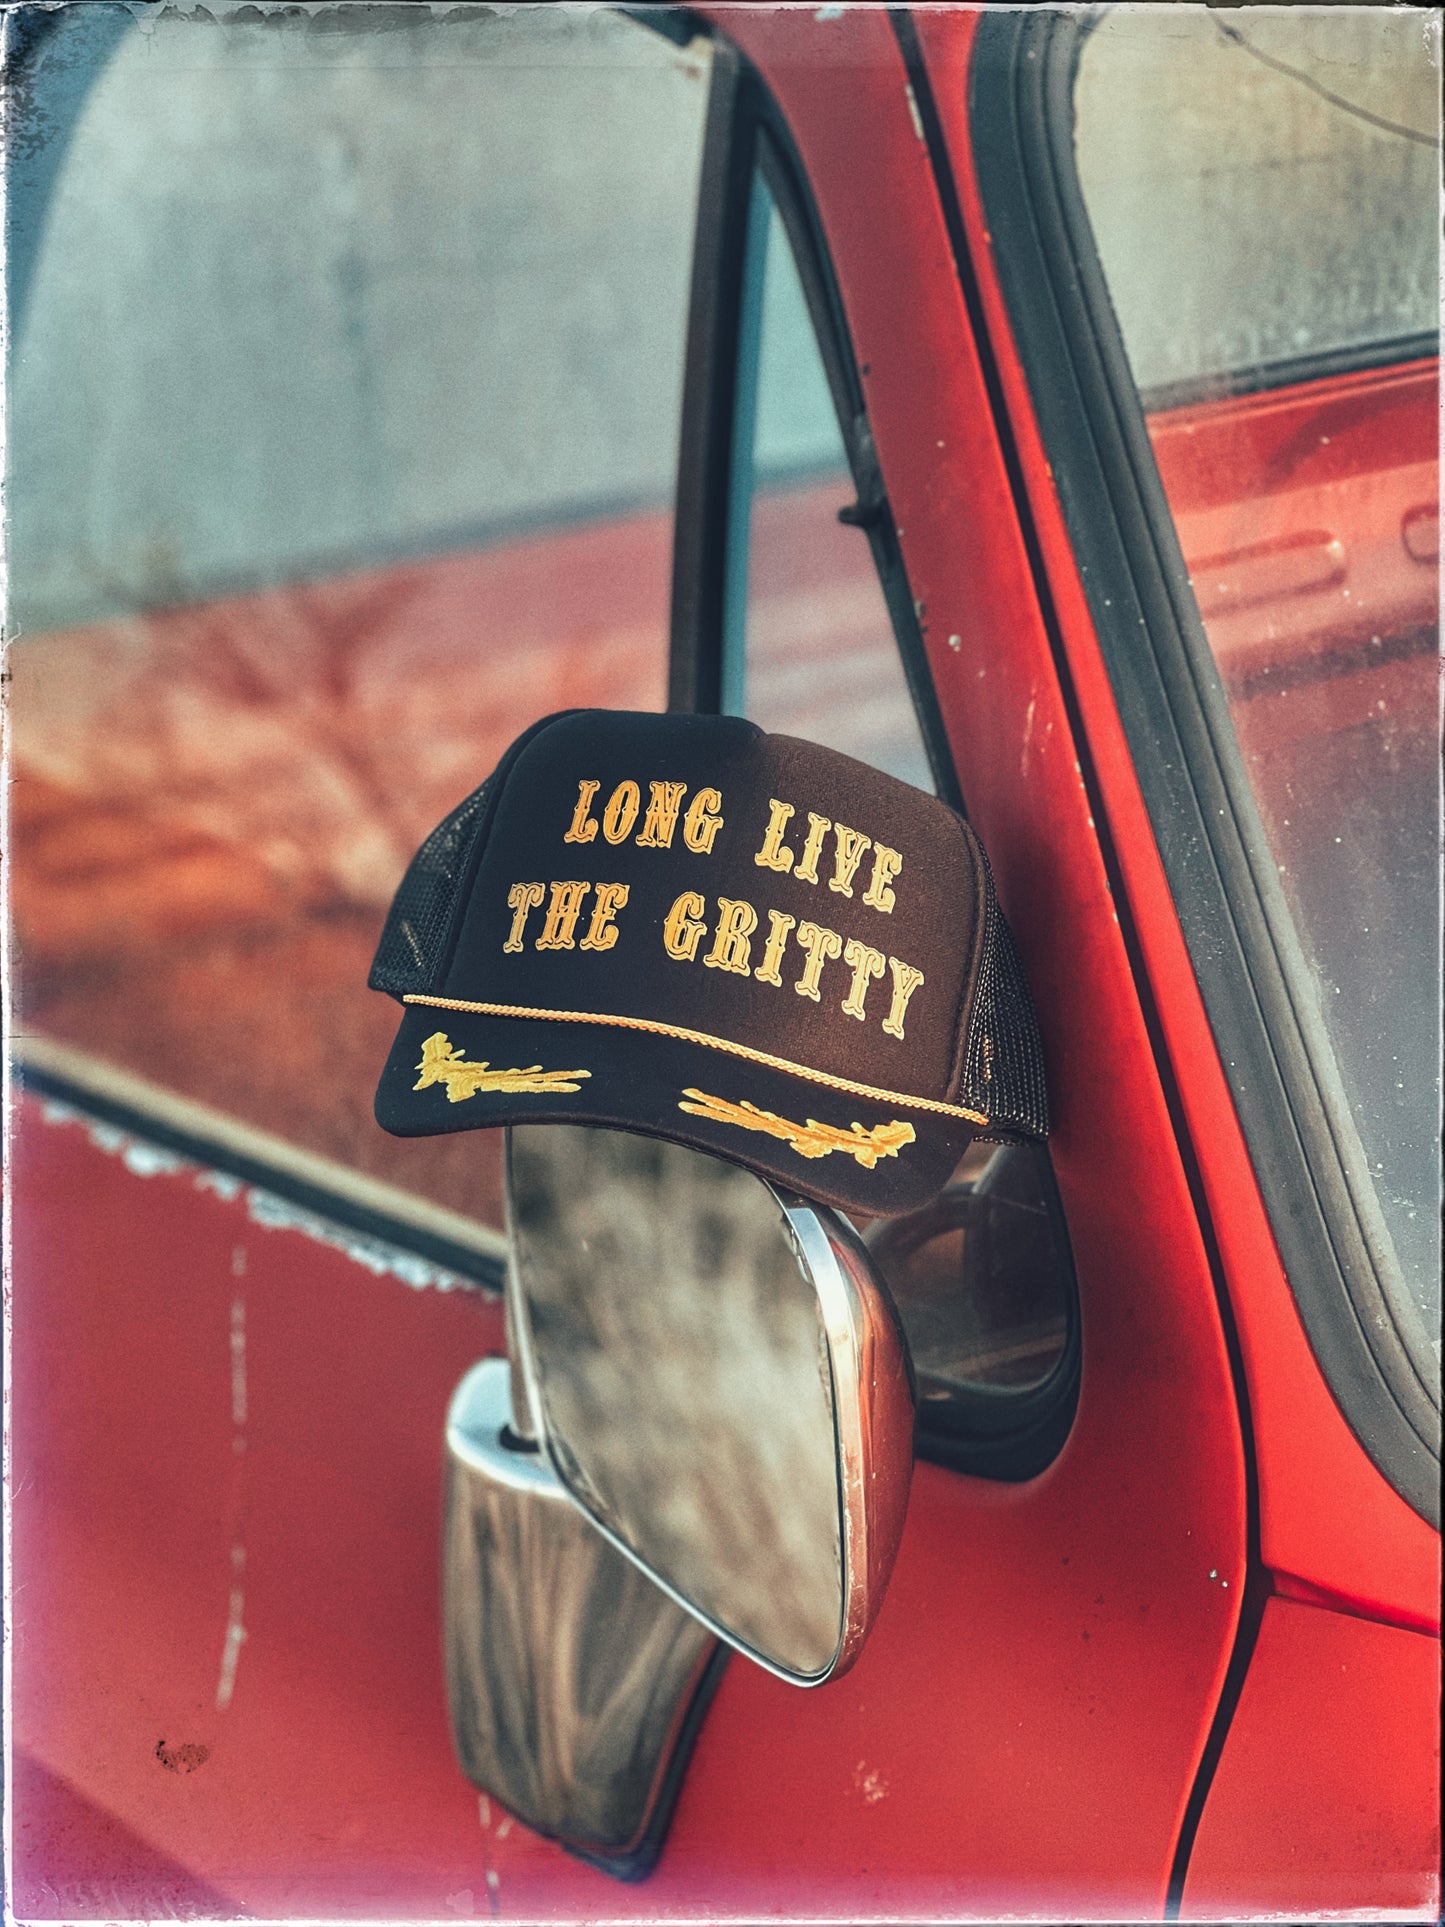 Long Live The Gritty Gold Oak Leaf Trucker Hat